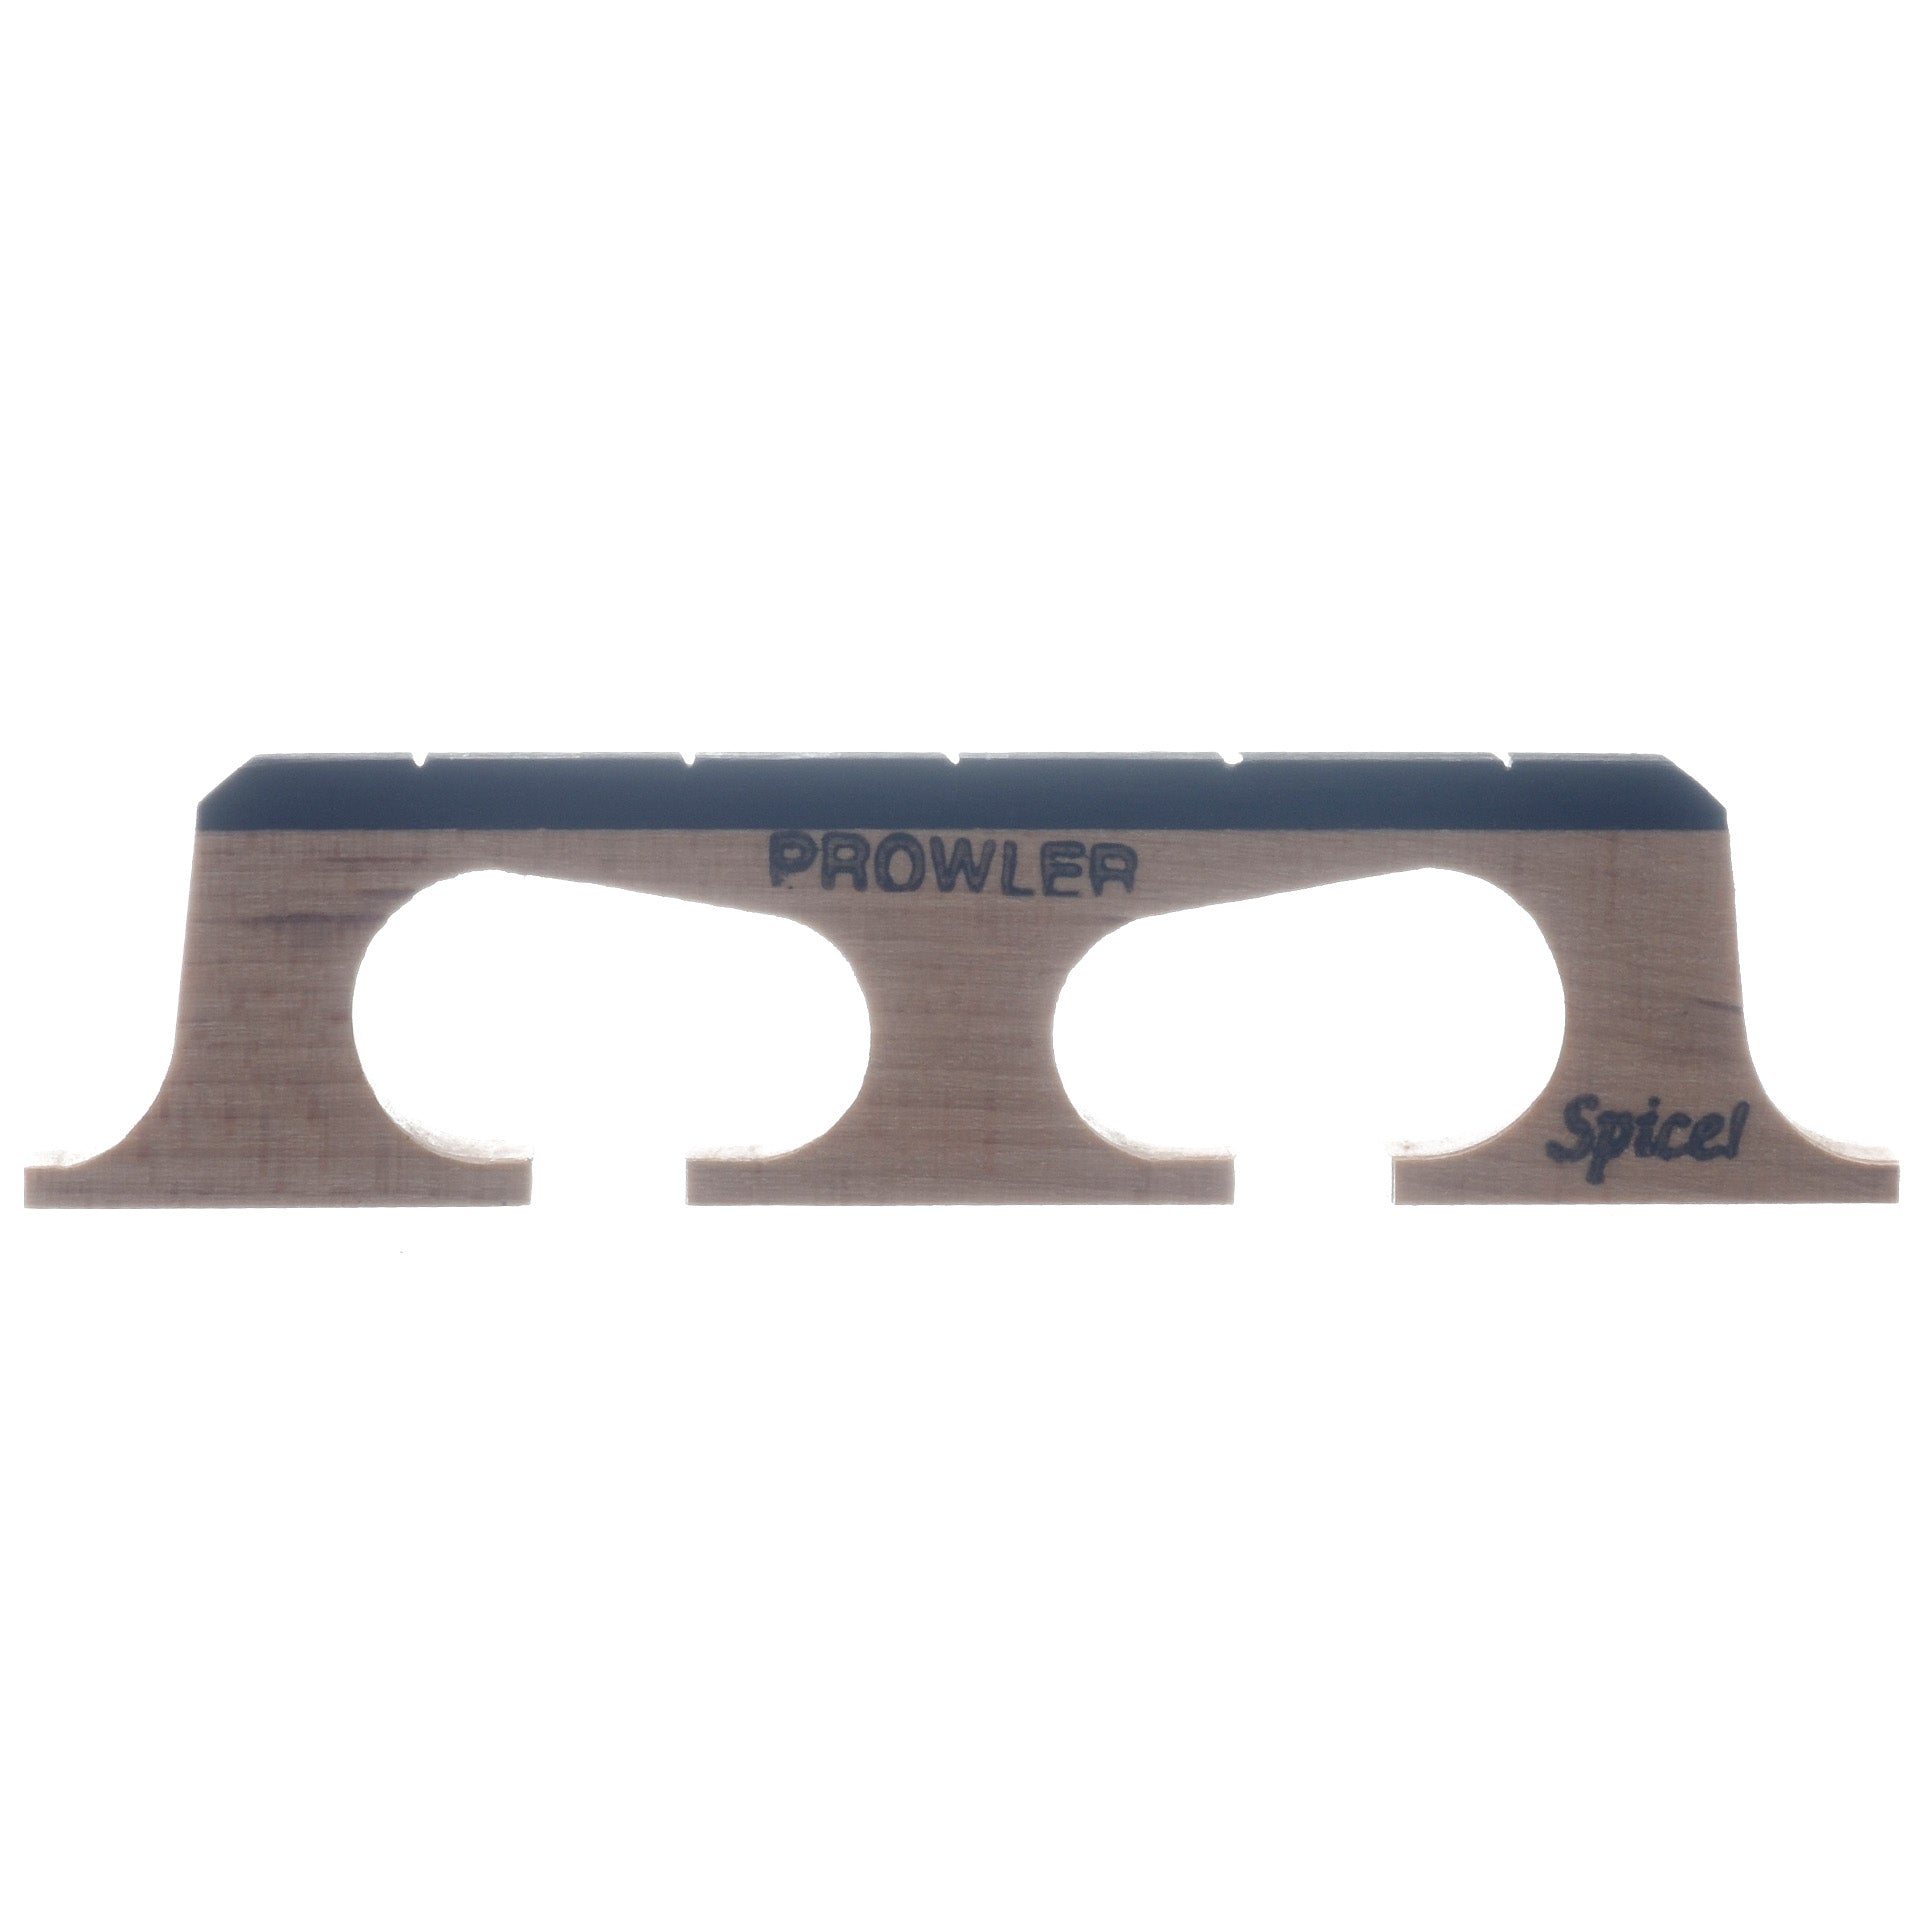 Image 2 of Kat Eyz Prowler Spice Banjo Bridge, 11/16" High, Standard Spacing - SKU# KEPB-11/16-S : Product Type Accessories & Parts : Elderly Instruments